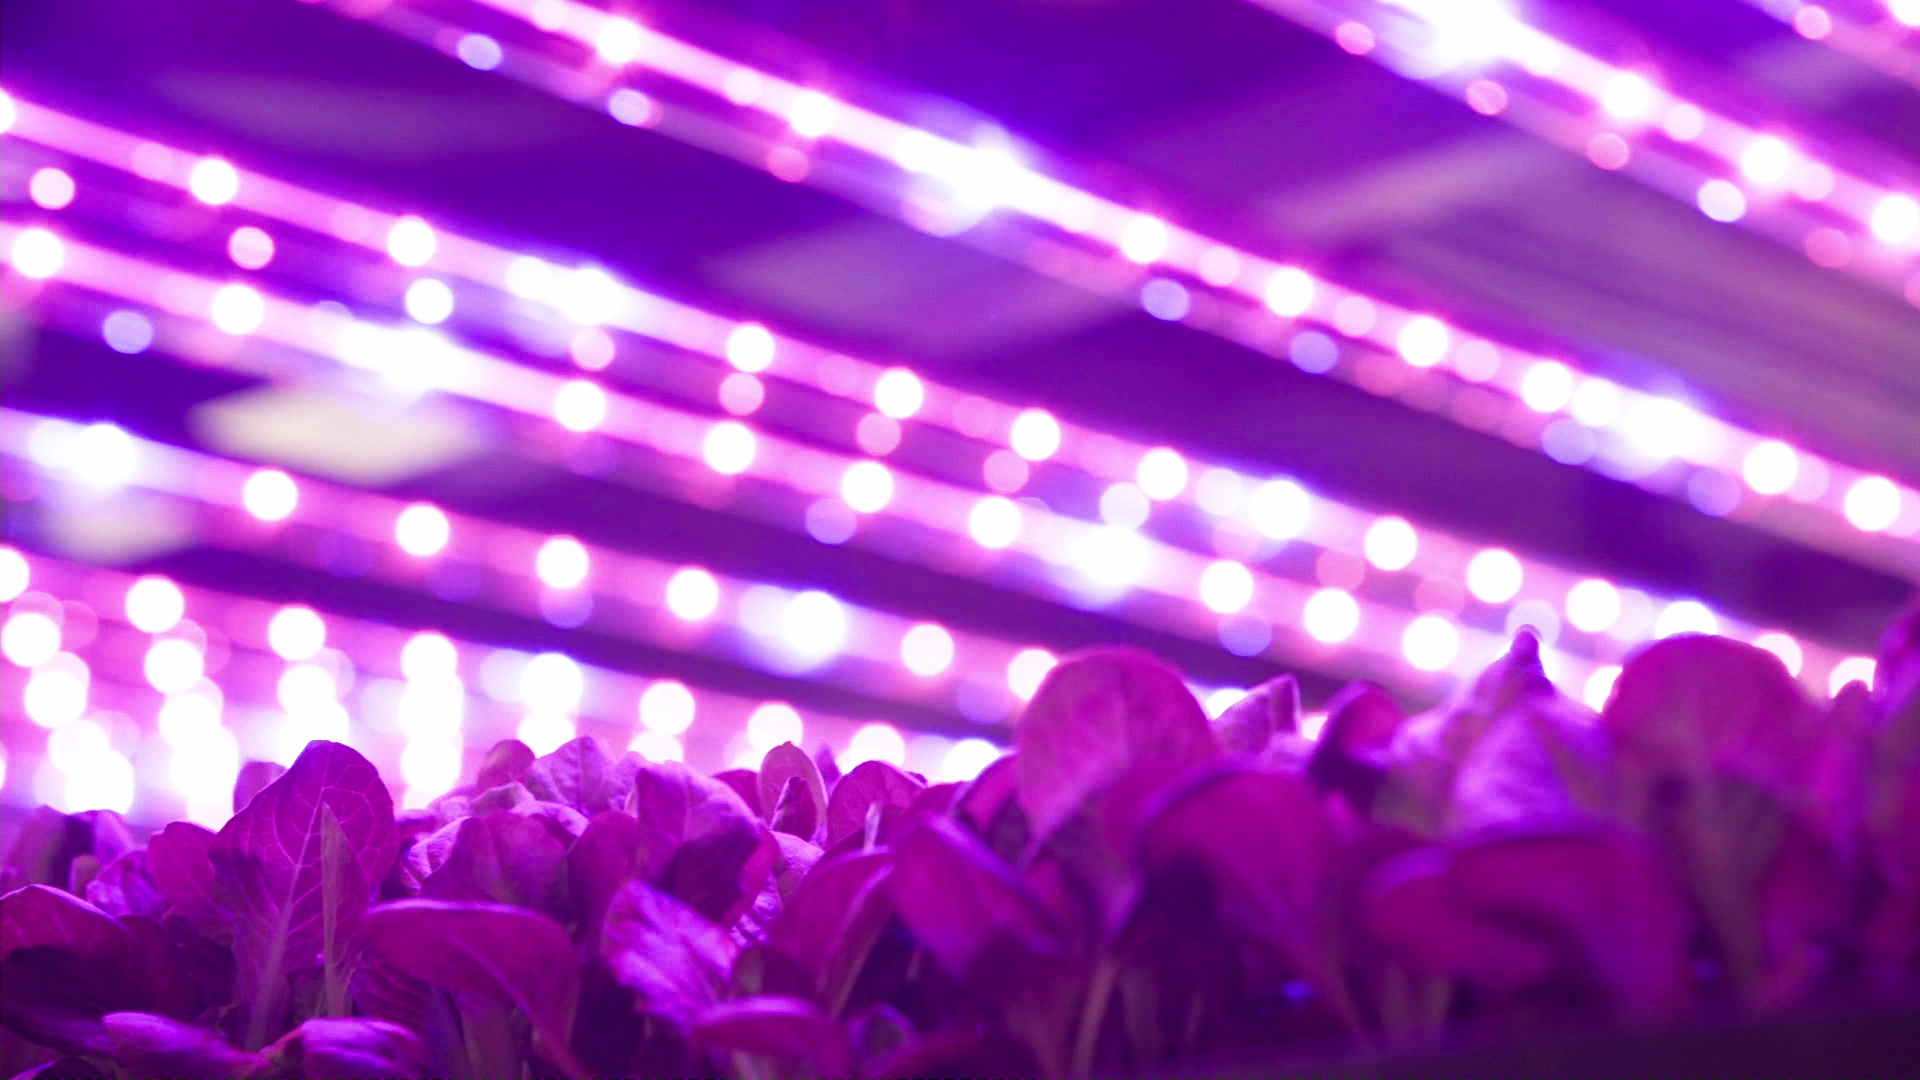 AeroFarms product growing under purple light